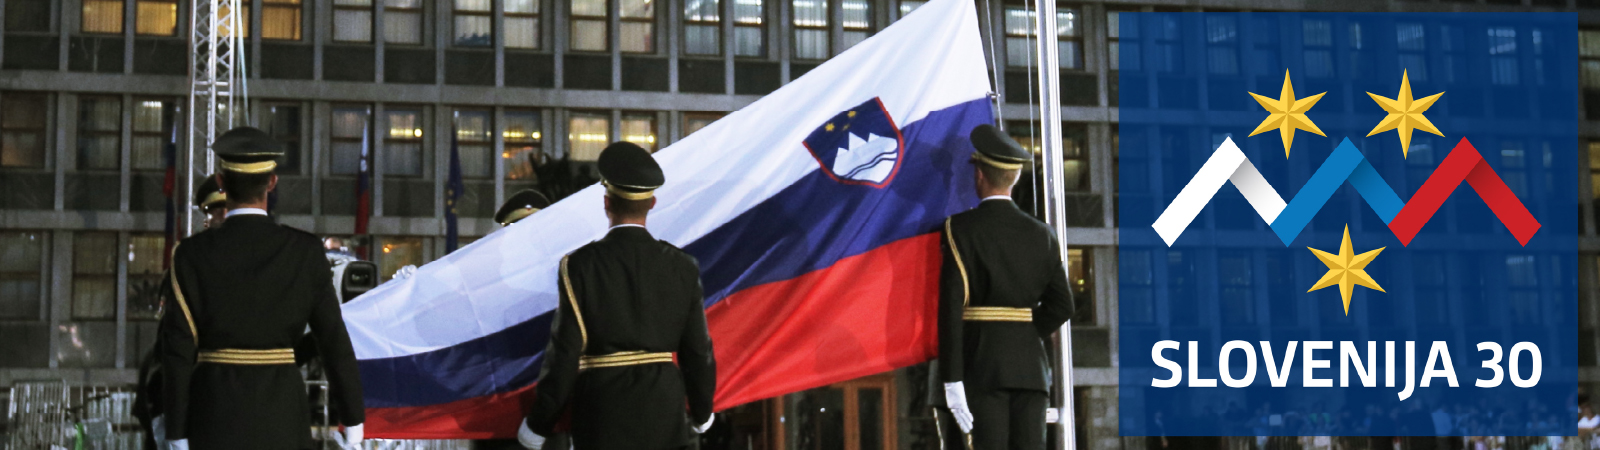 Honor guard in Trg Republike, raising the Slovenian flag.